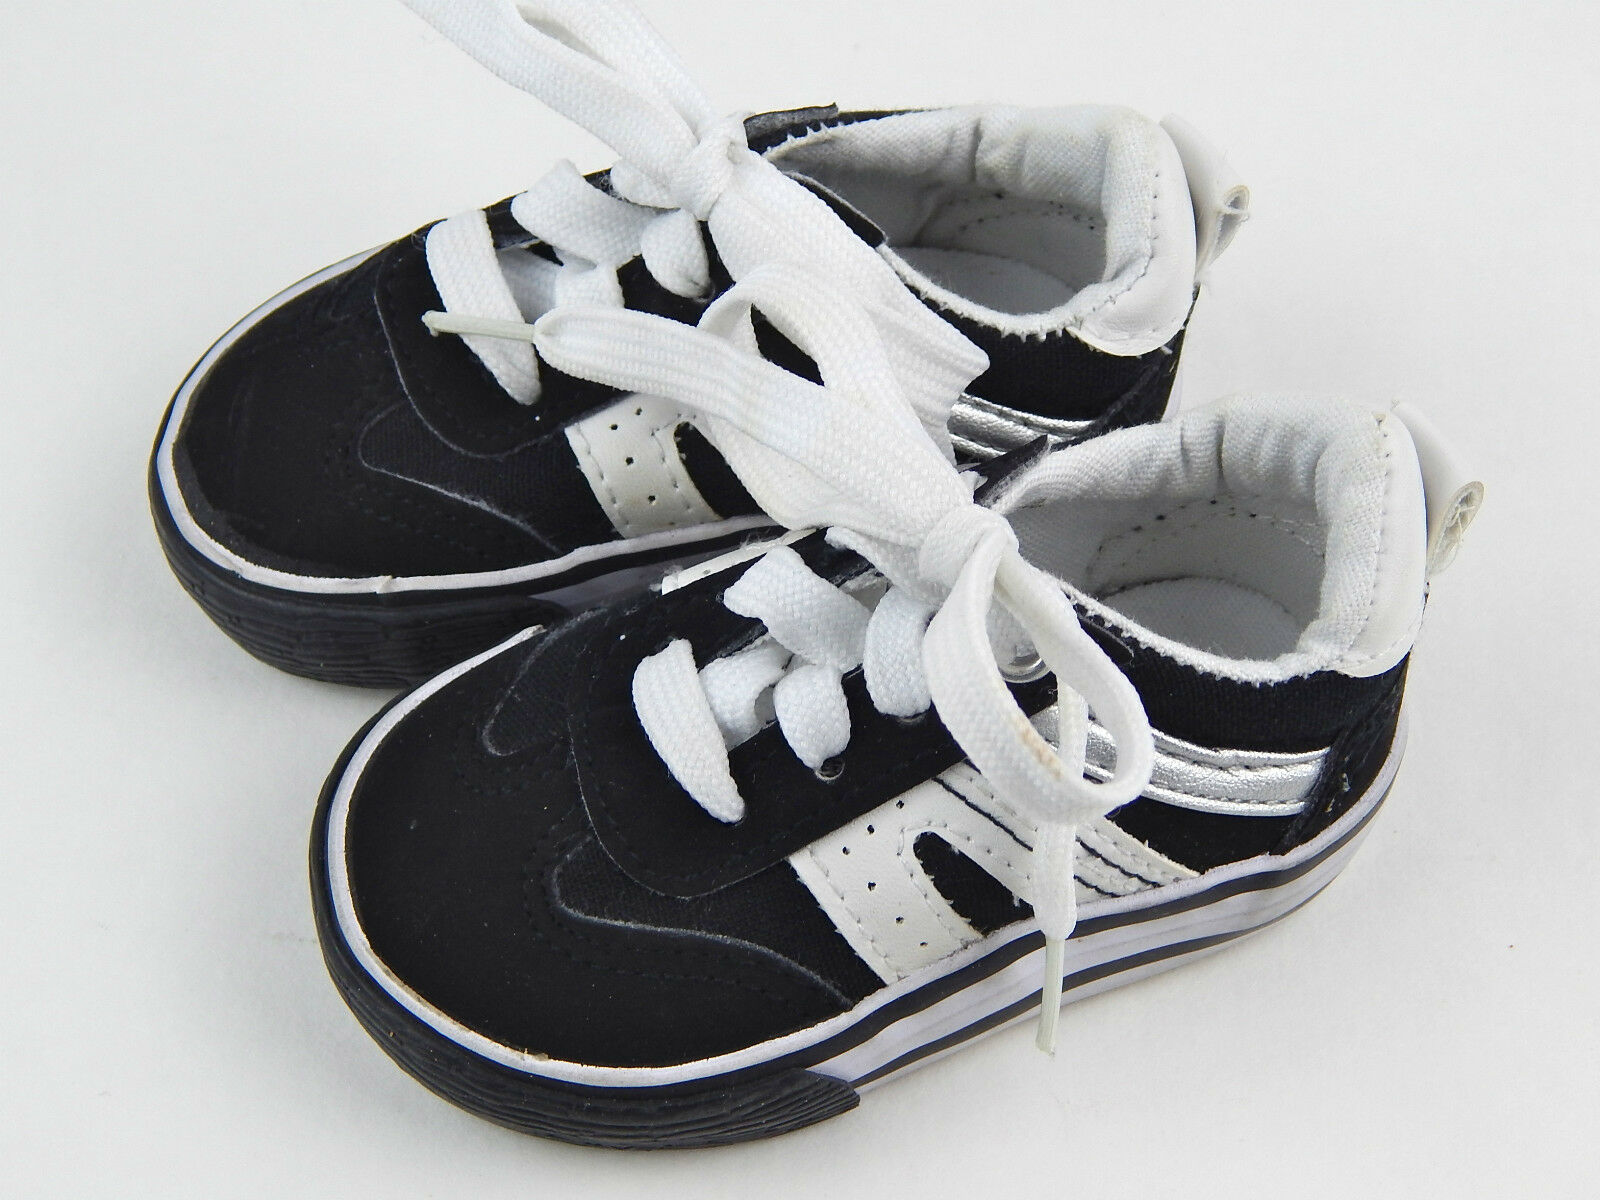 Koala Kids Black, White, Silver Striped Sneakers Size 2 Excellent Condition - $11.87